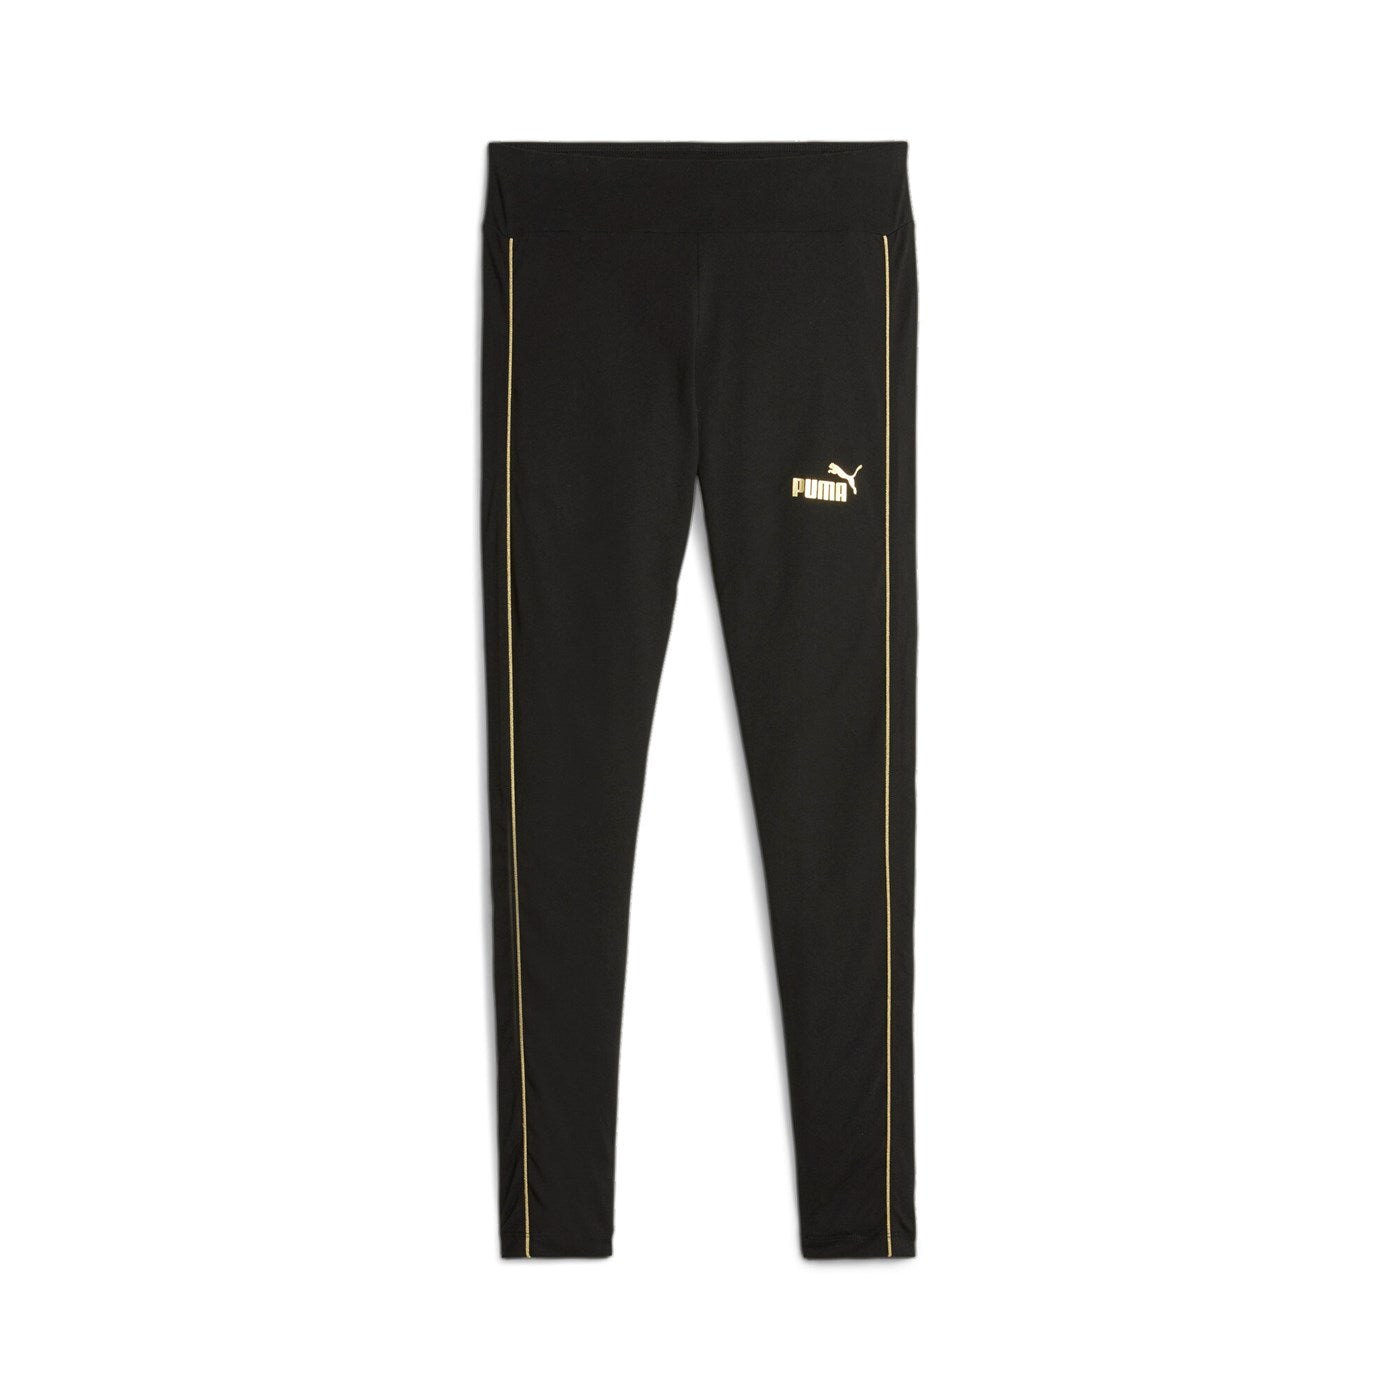 Puma pantalone sportivo da donna Leggings ESS+ Minimal Gold 680021 01 nero